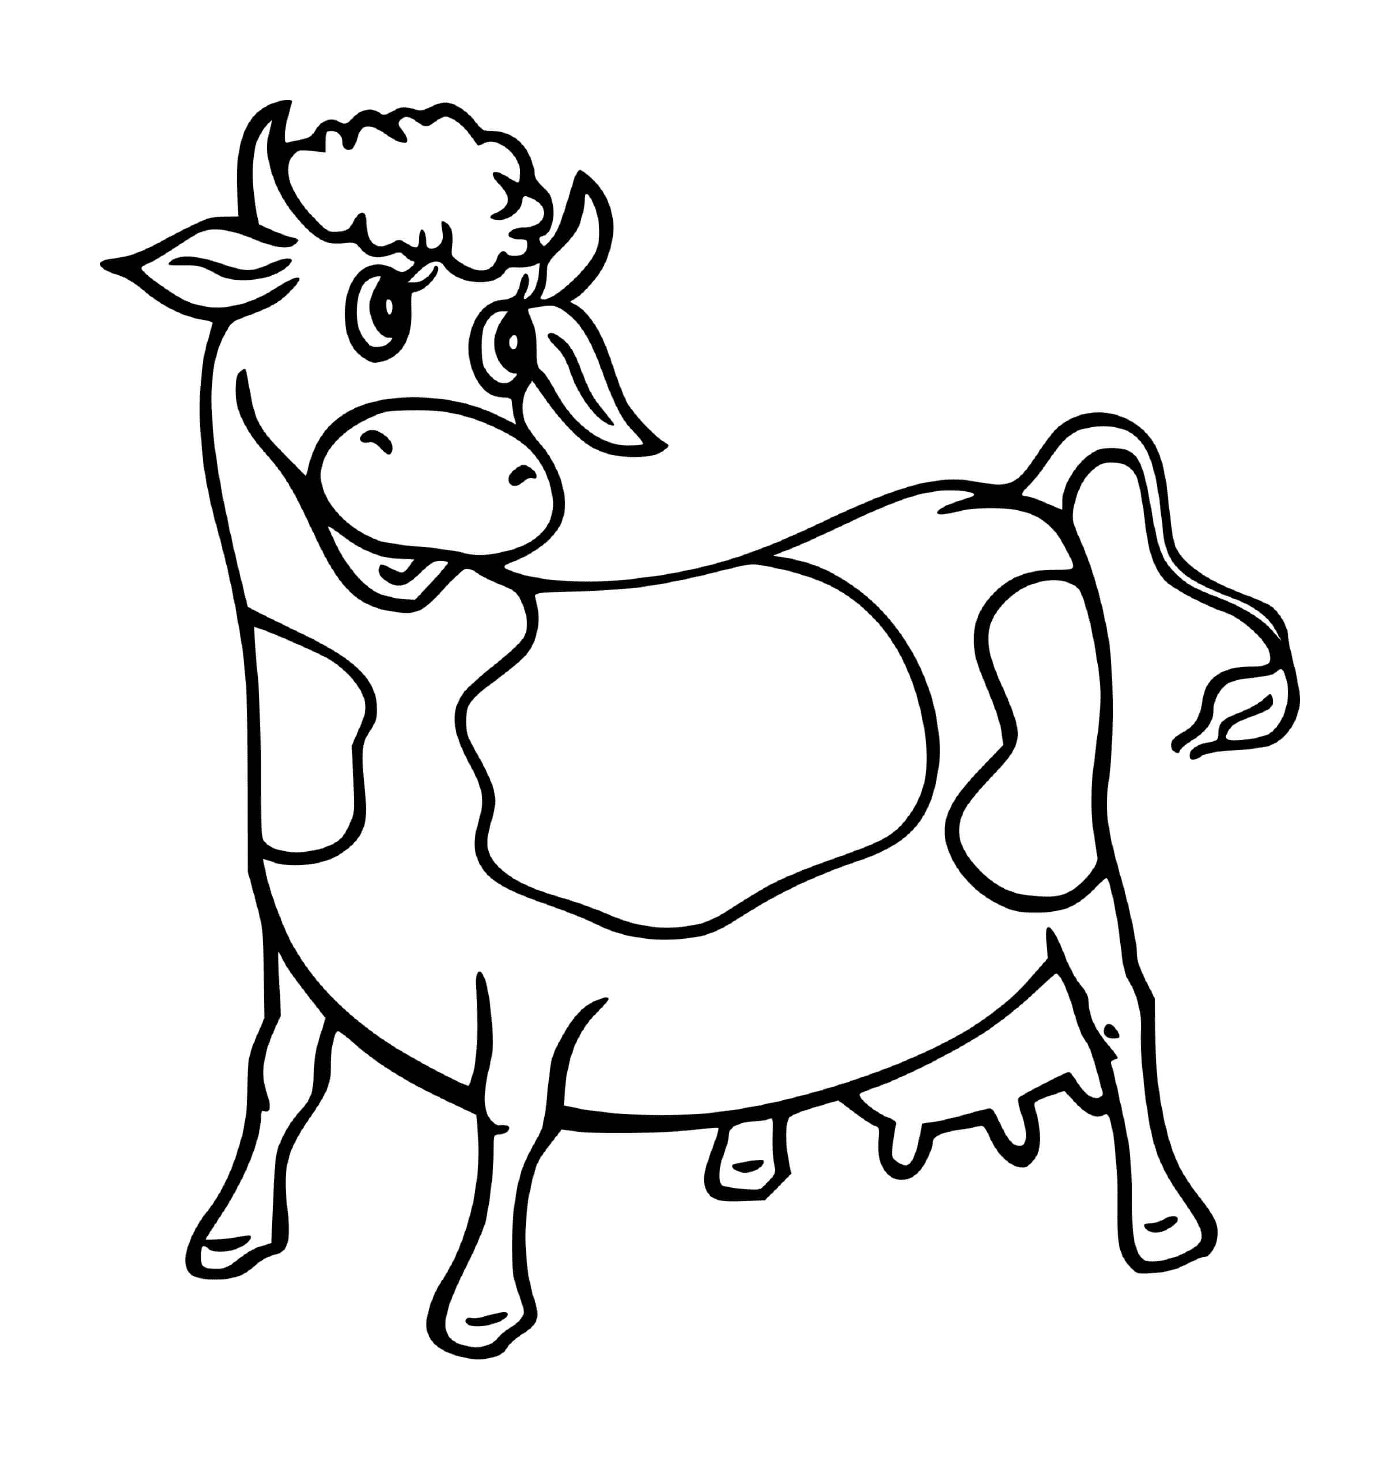  Farm animals, cow 